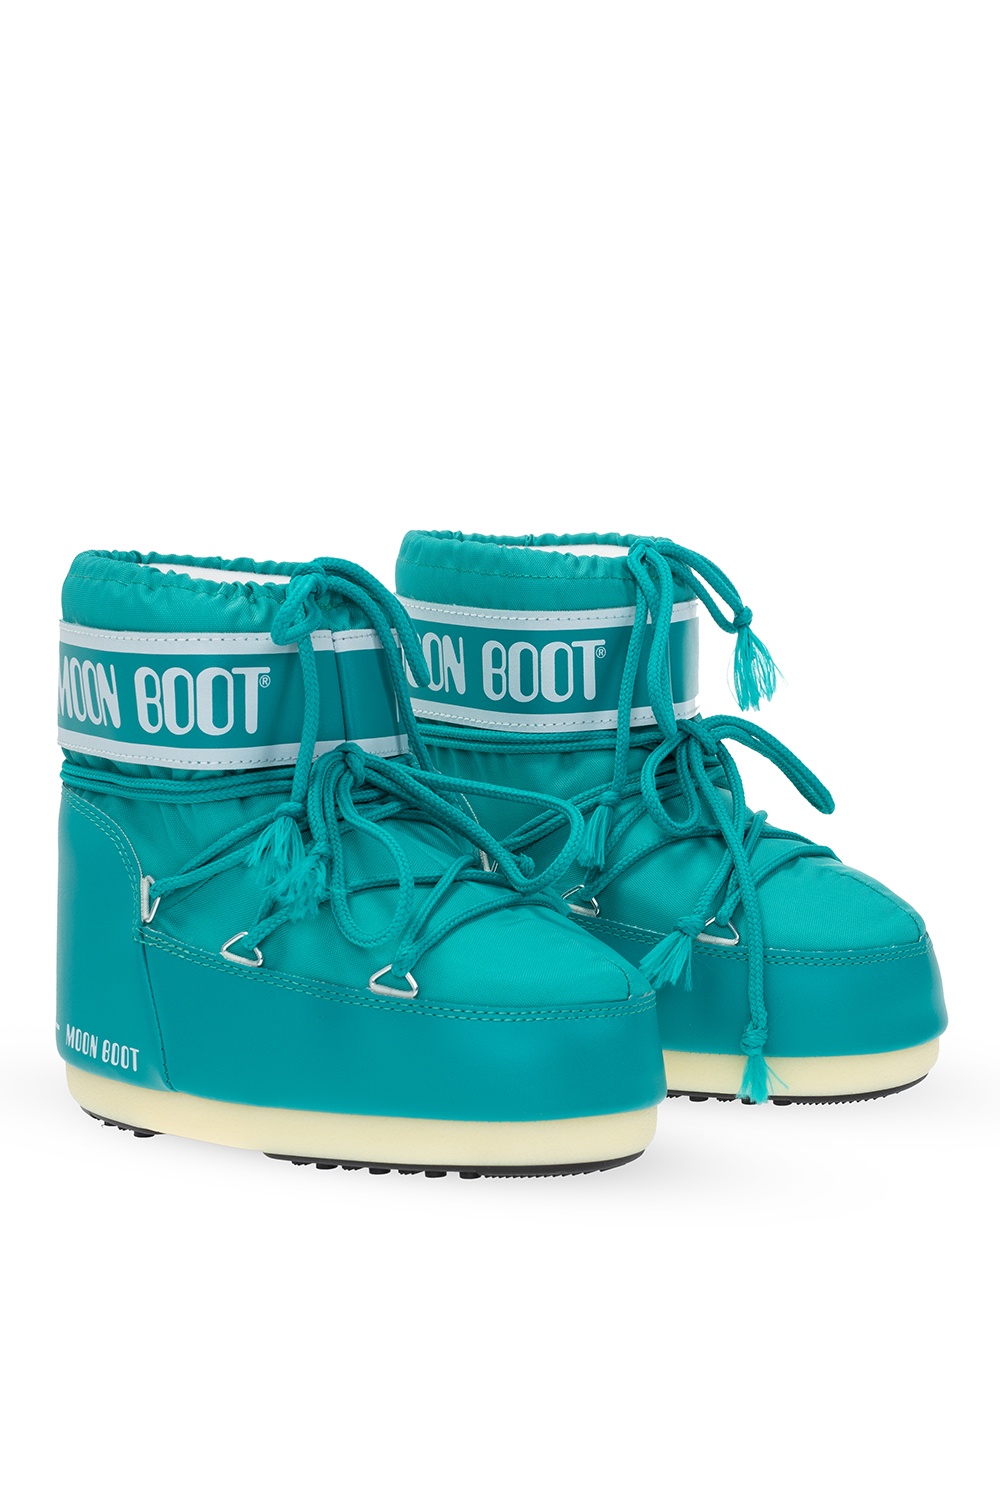 puma suede citi series grundschule sneaker ‘Classic Low 2’ snow boots